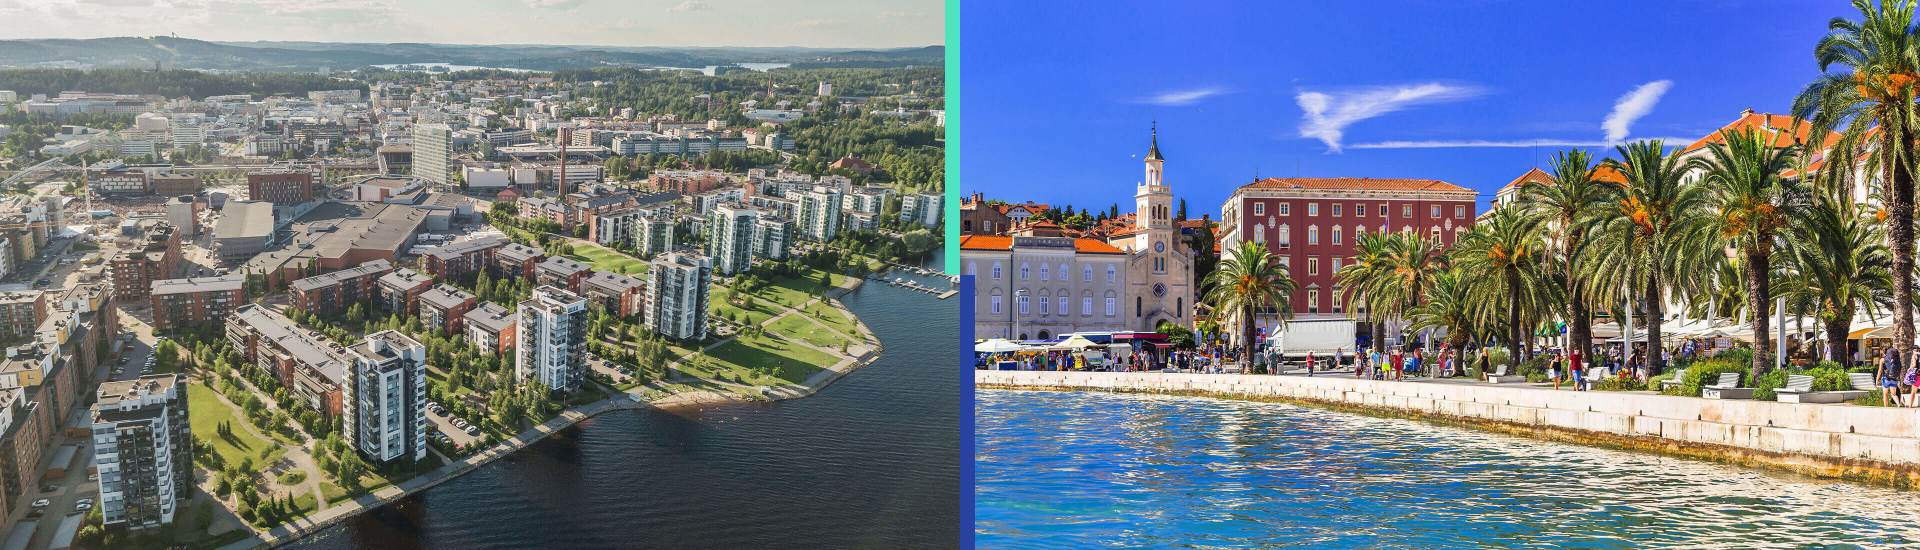 Meet the ICC cities: Jyväskylä (Finland) and Split (Croatia)